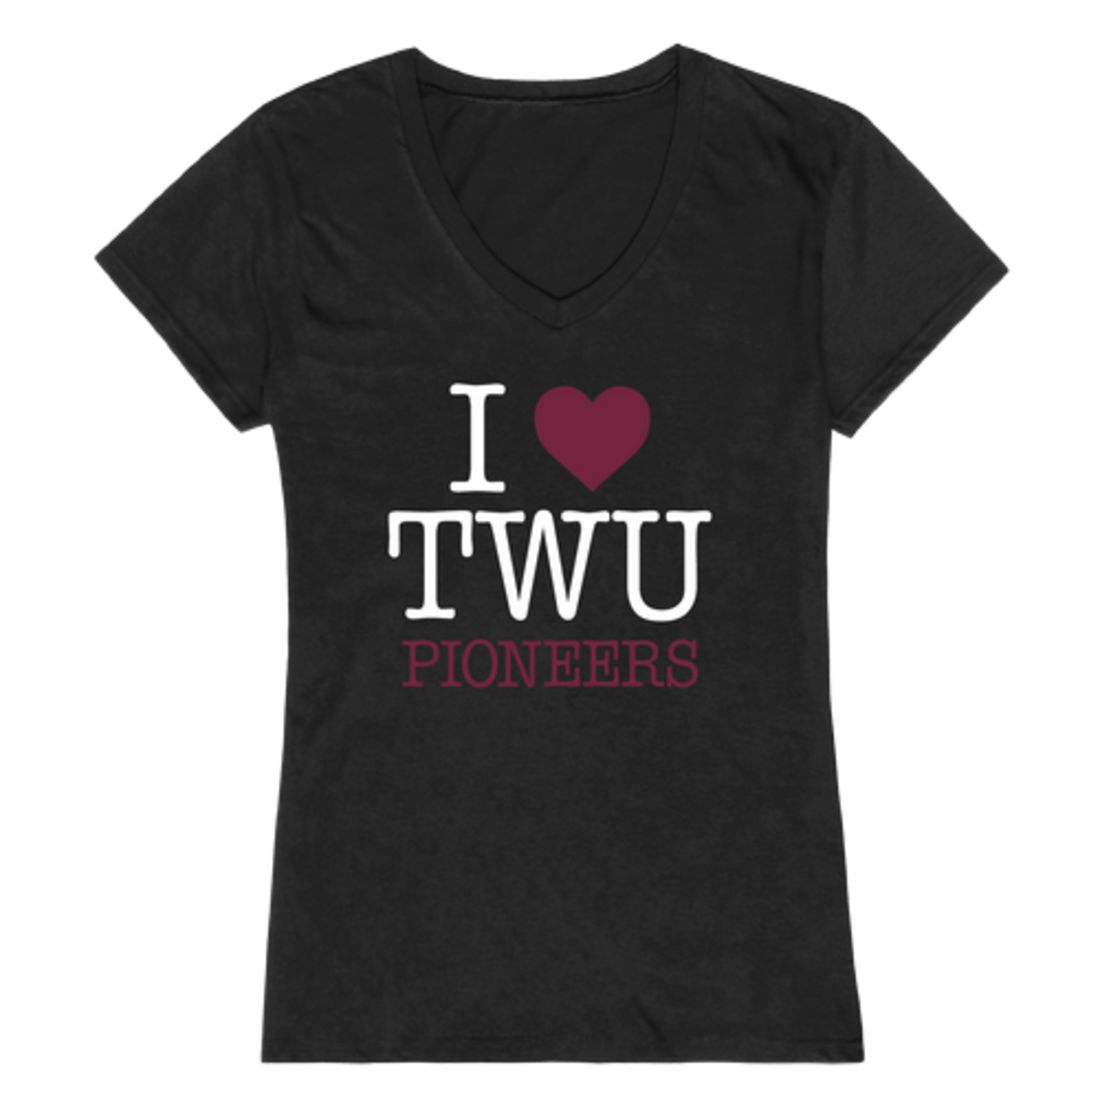 I Love Texas Woman's University Pioneers Womens T-Shirt Tee